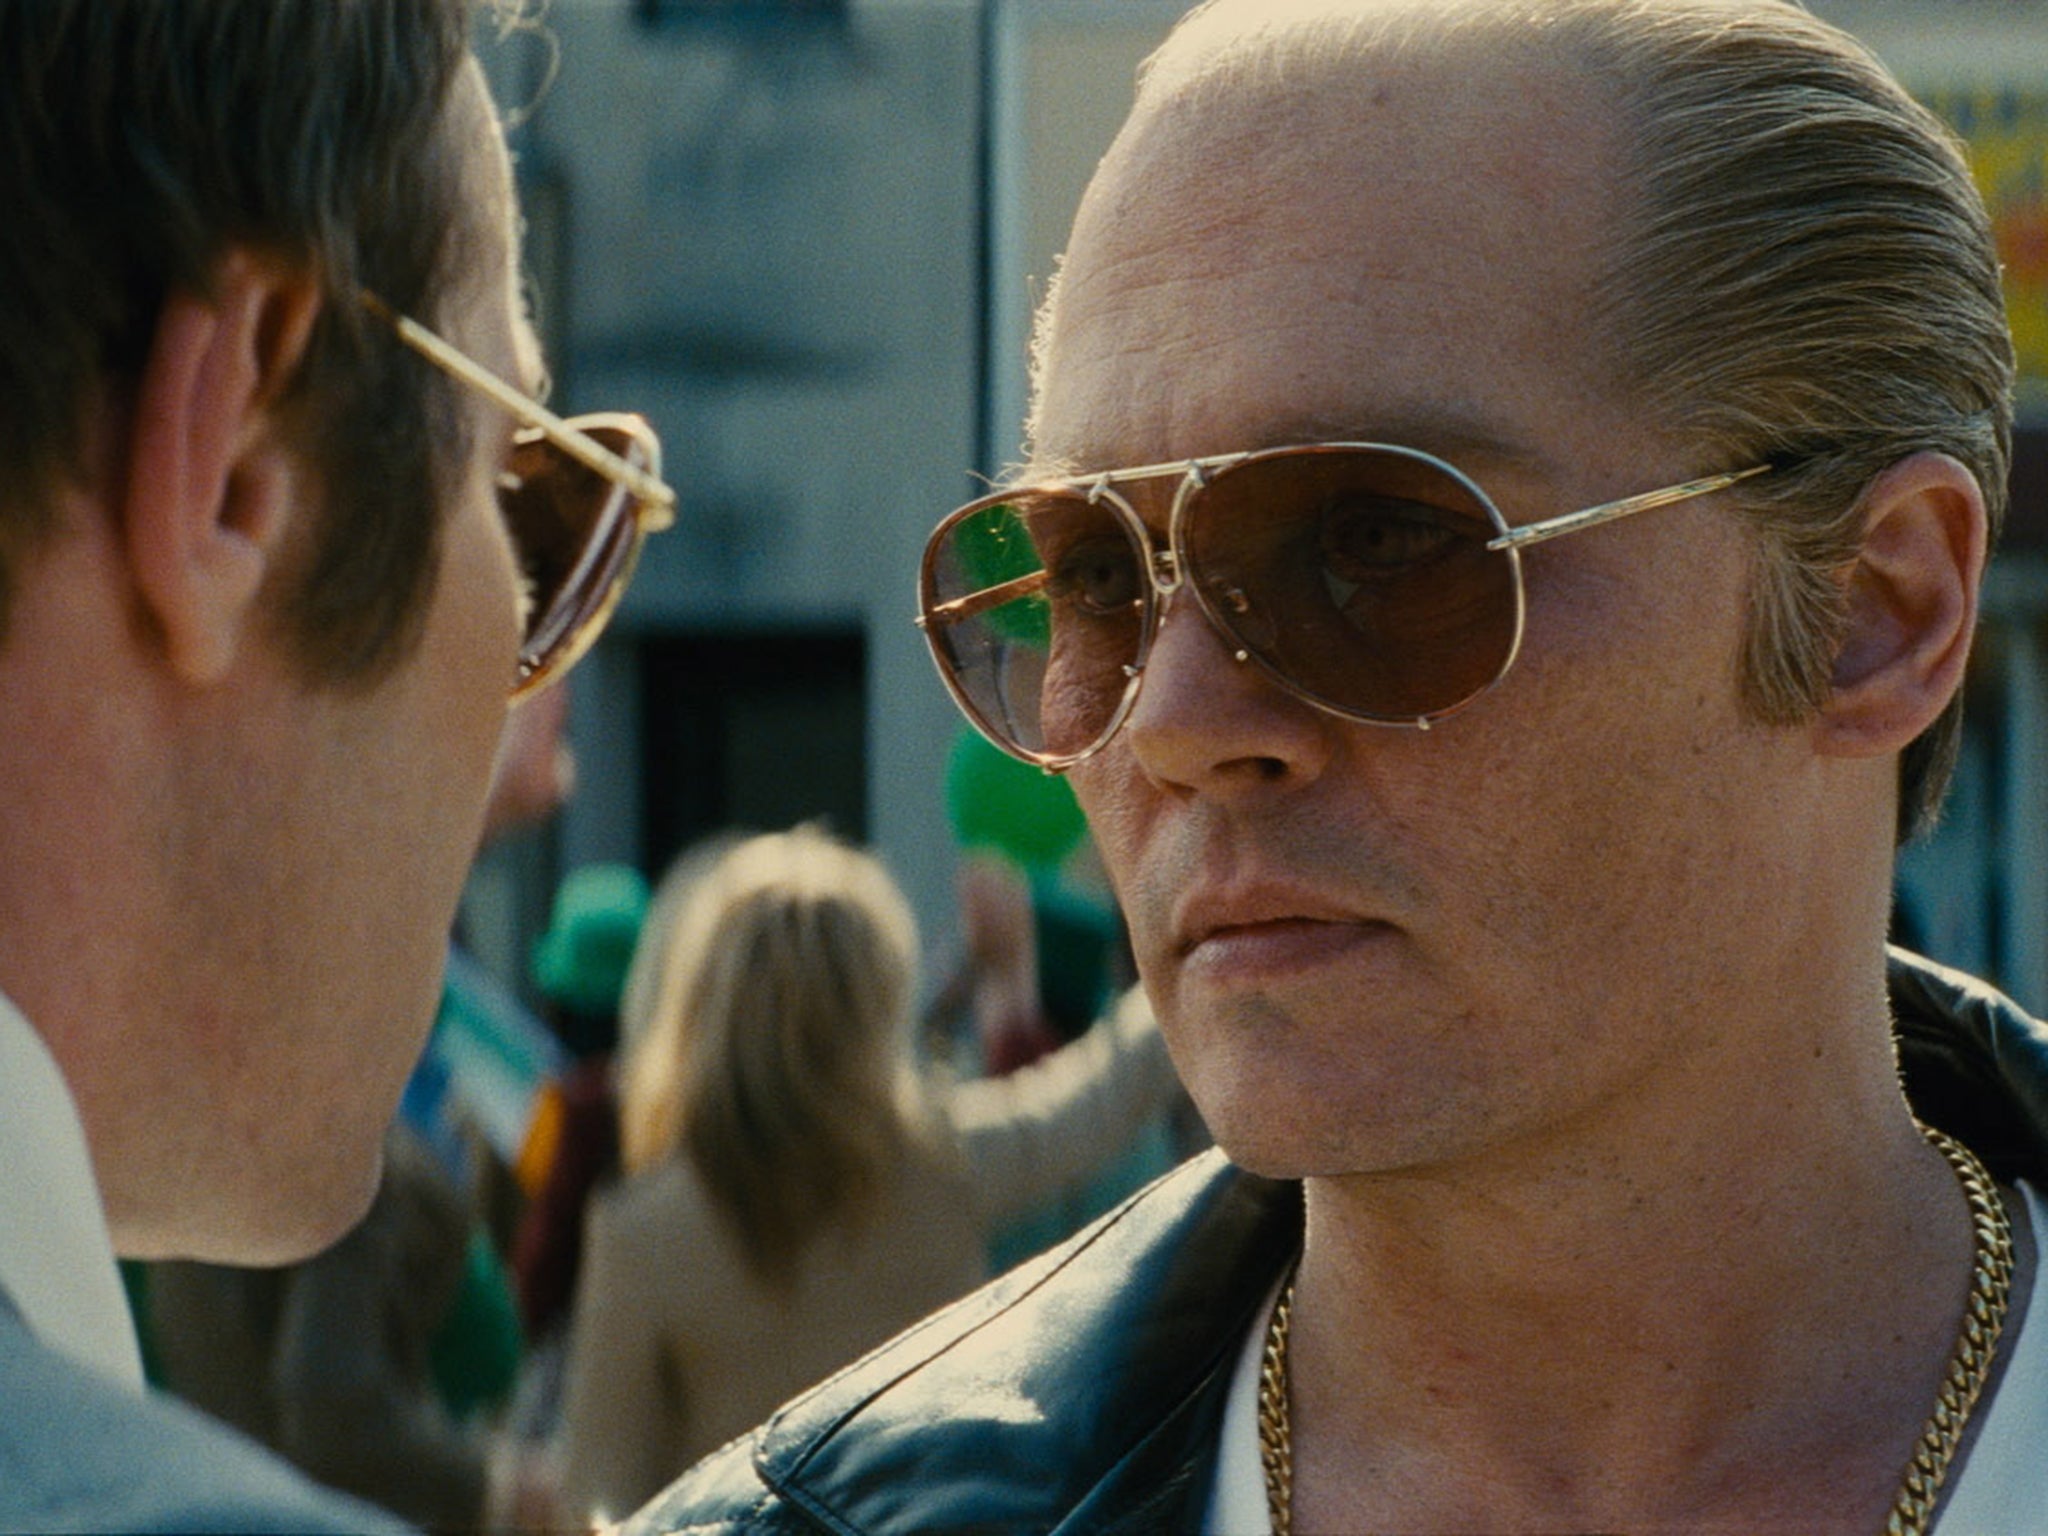 Gangster: Johnny Depp in a scene from 'Black Mass'